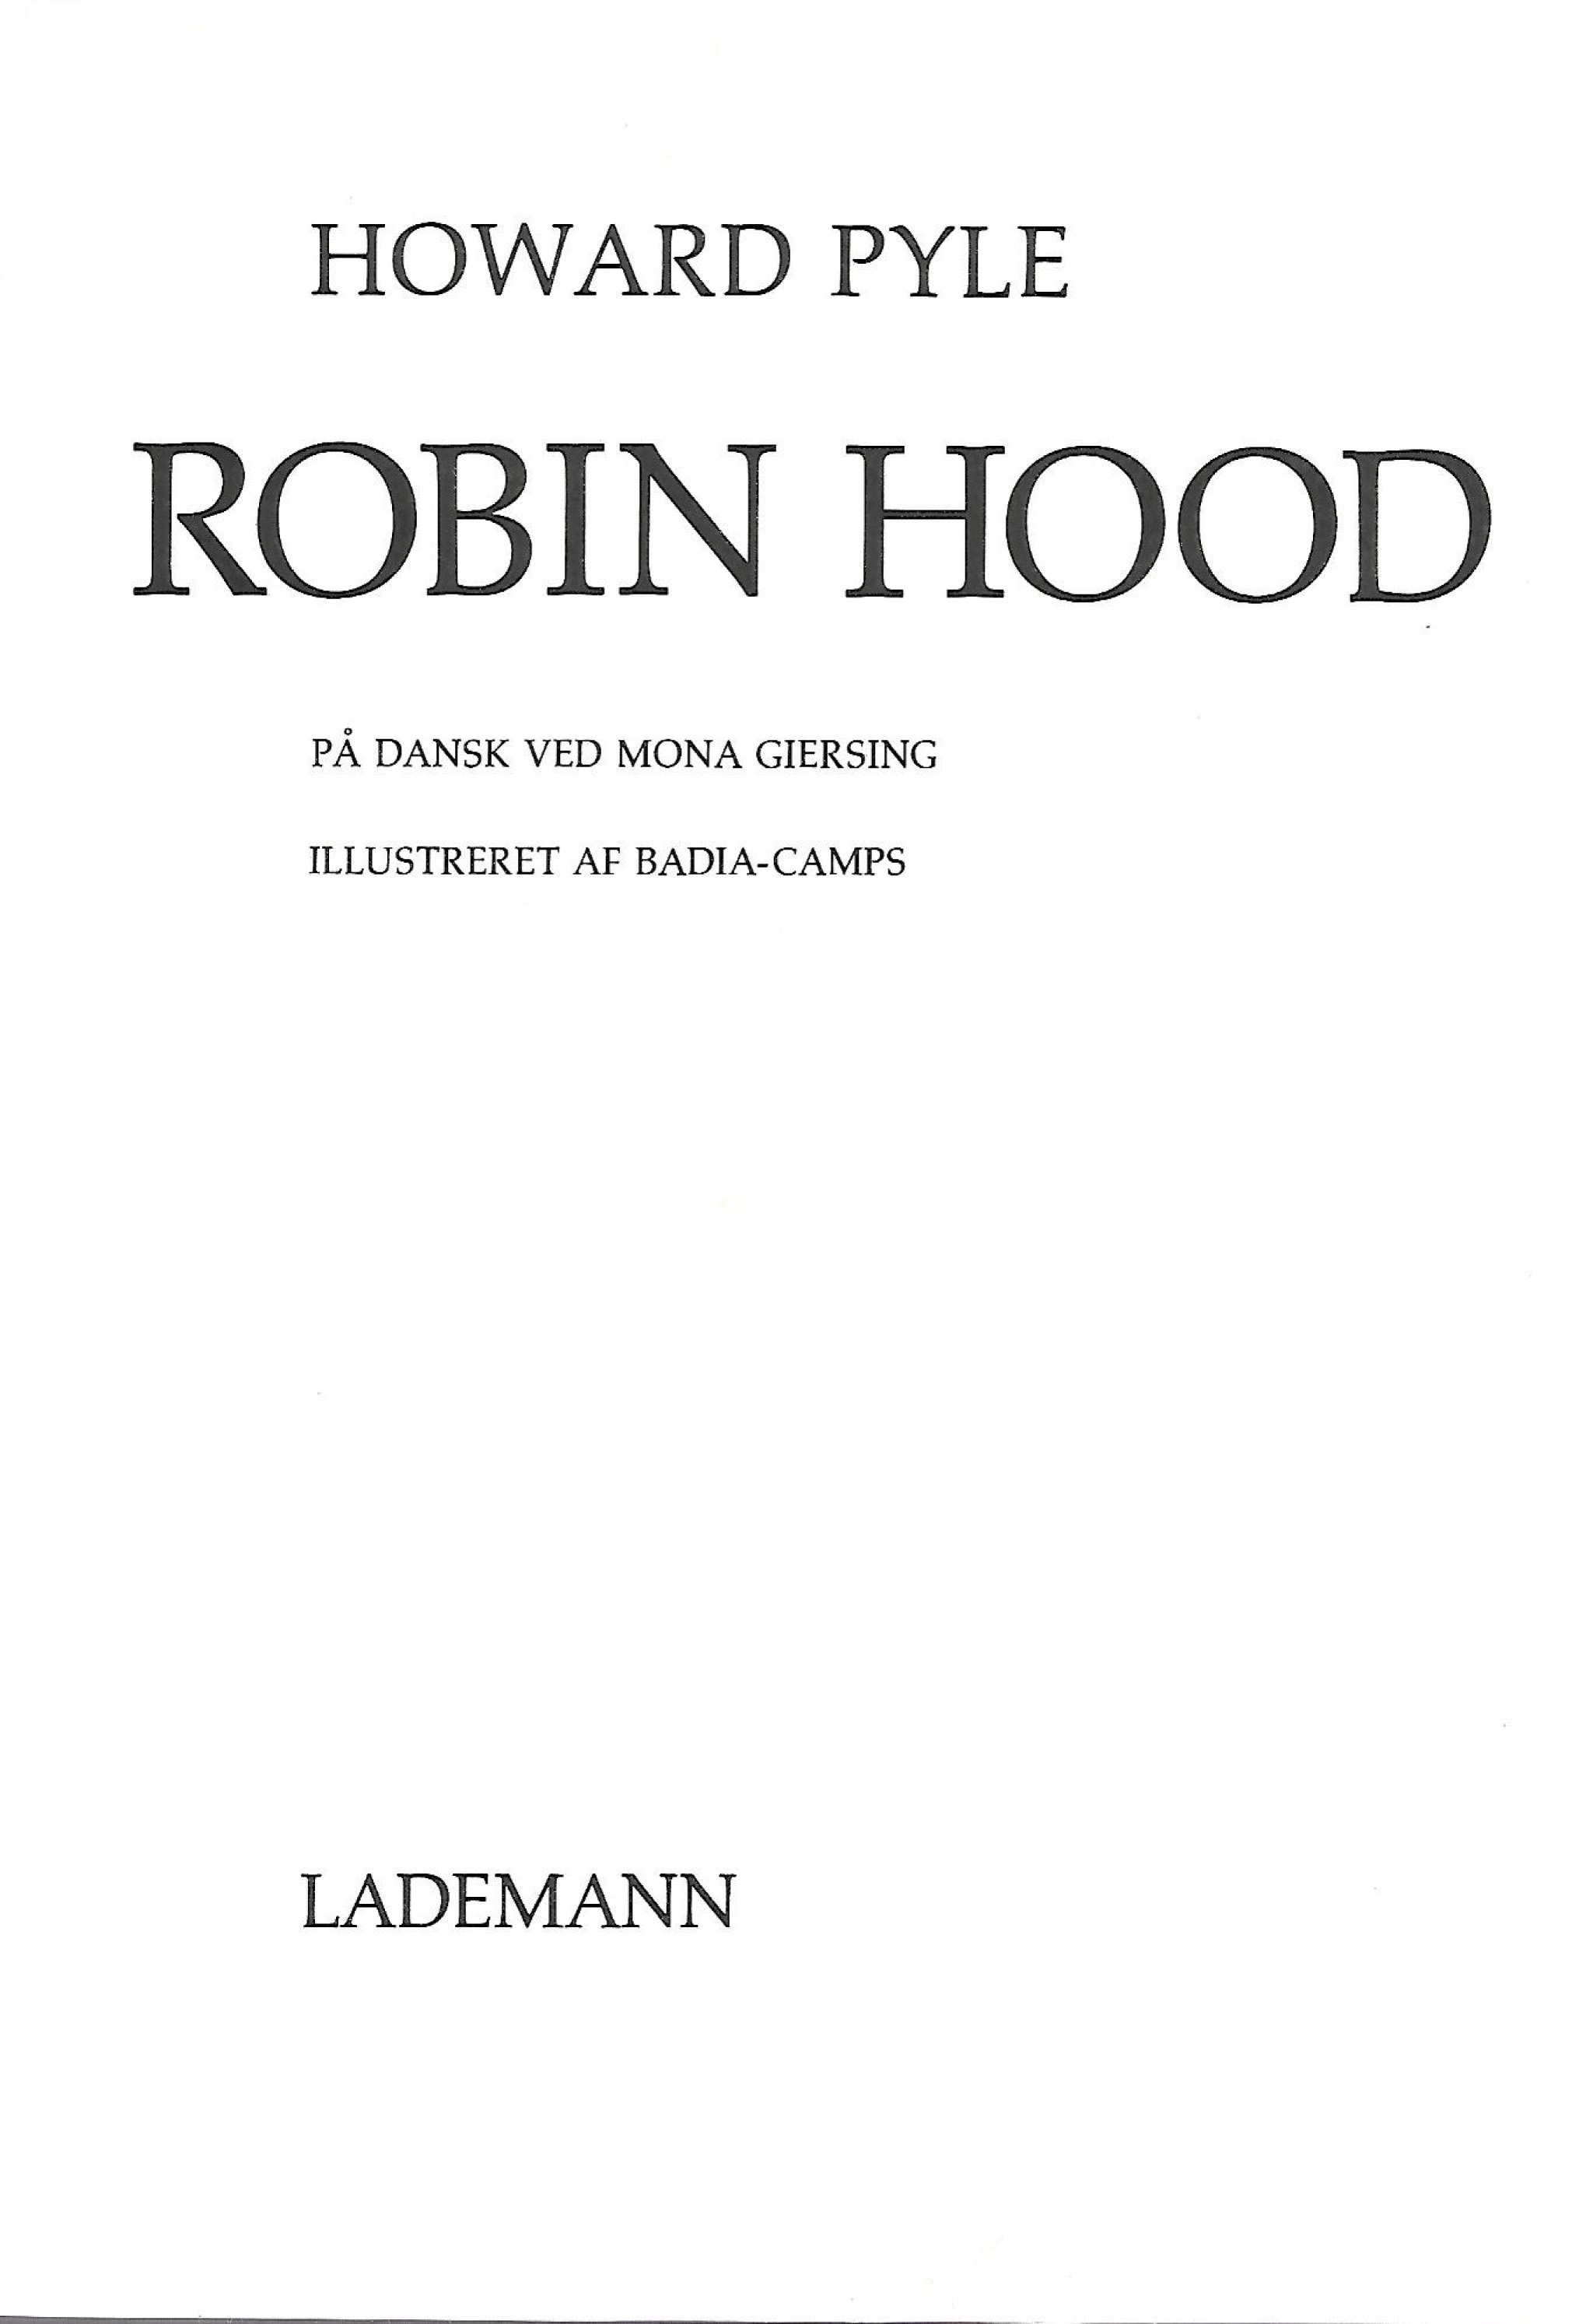 Robin Hood - Howard Pyle (2)-1